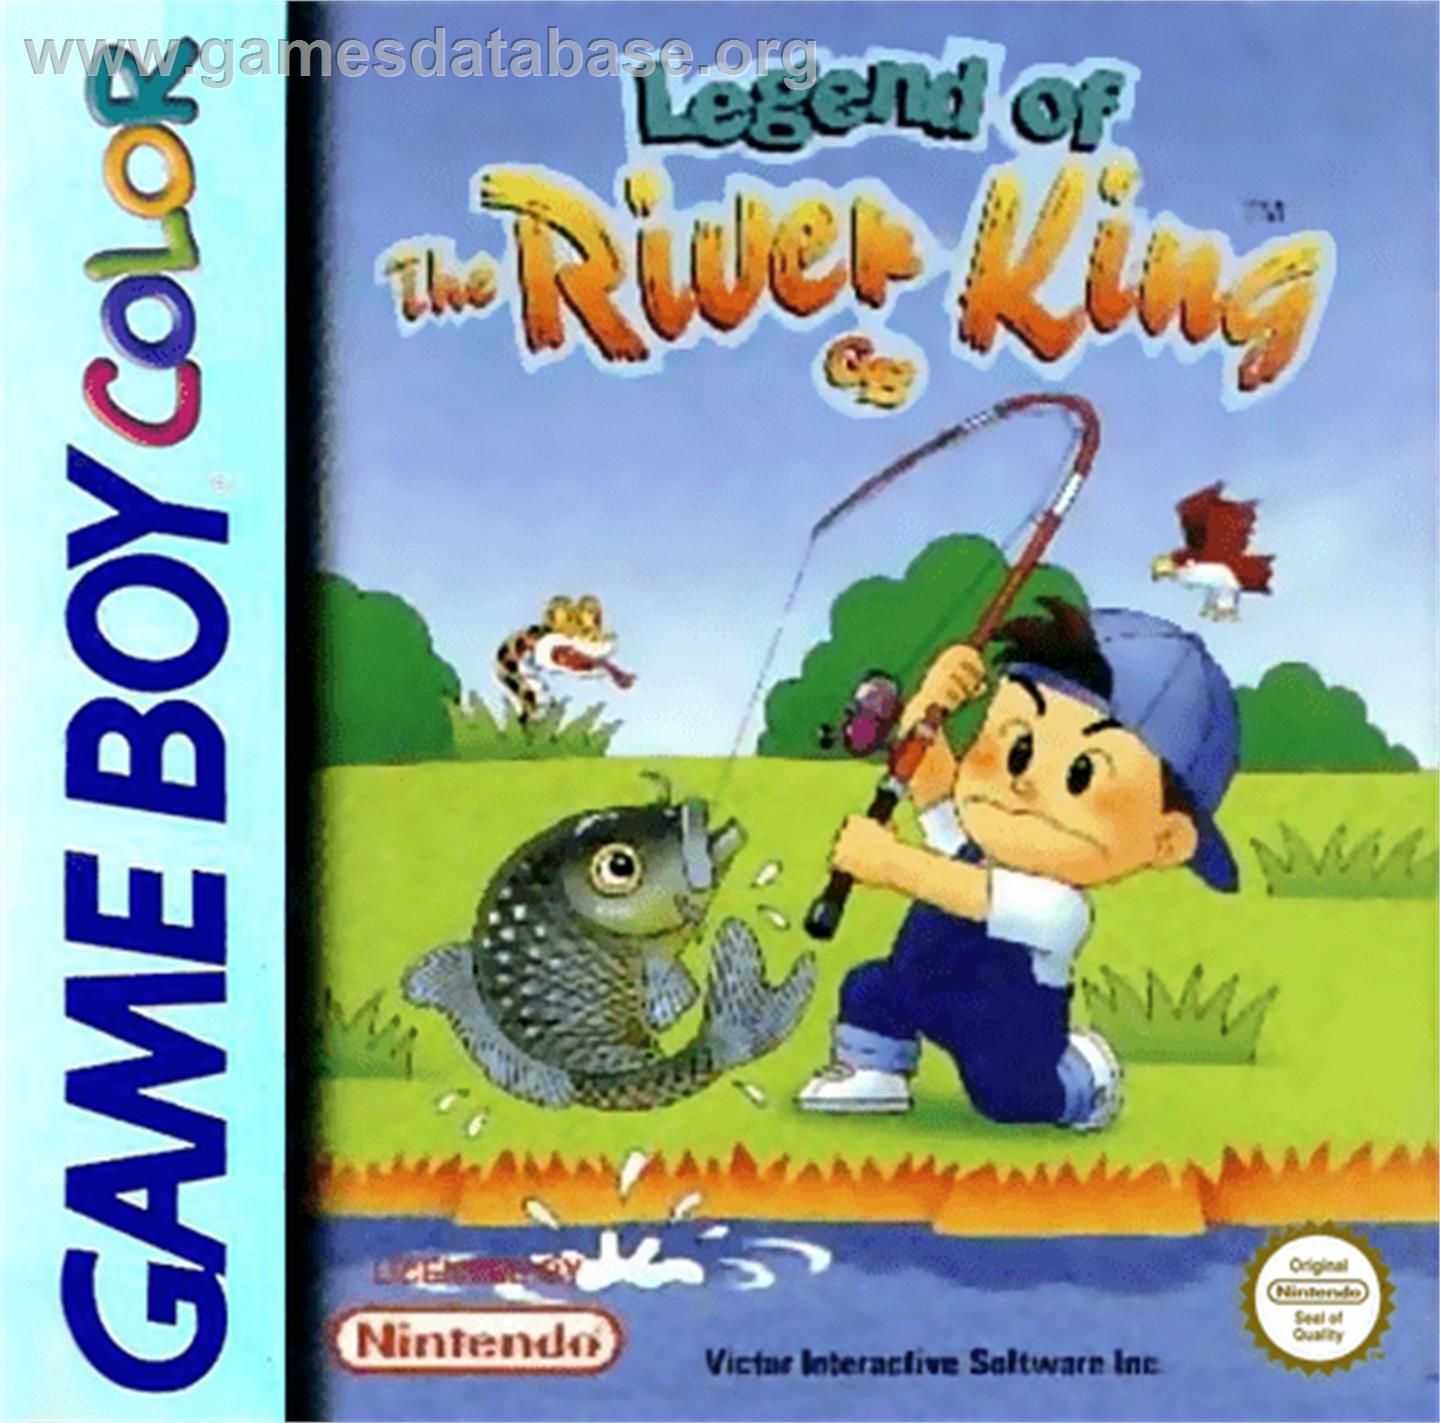 Legend of the River King GB - Nintendo Game Boy Color - Artwork - Box